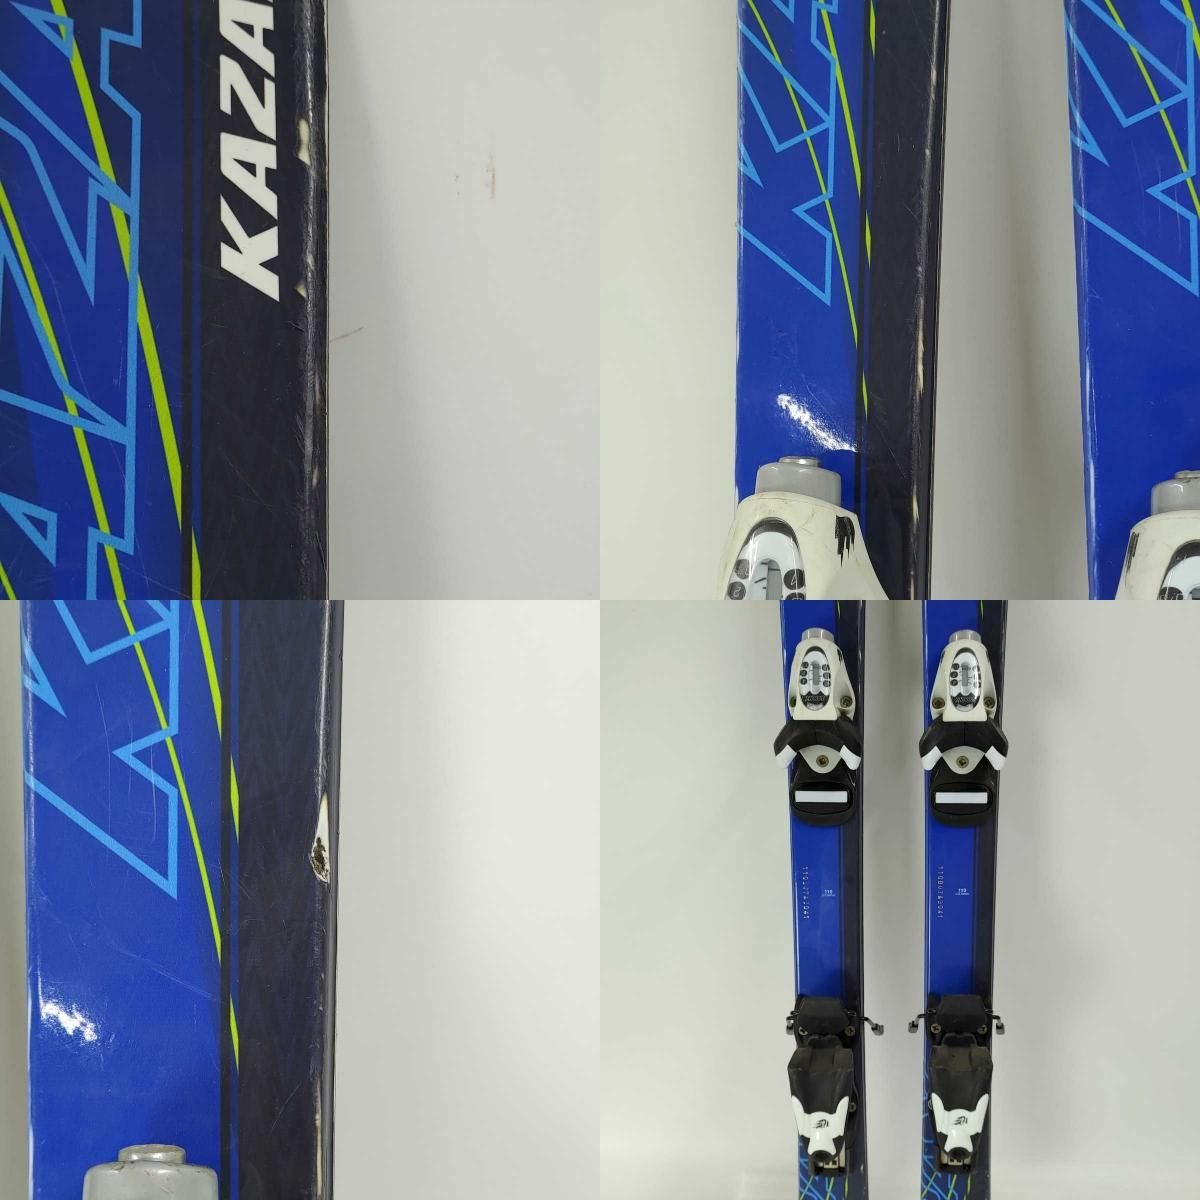 KAZAMA スキーセット 110cm ブルー - スキー